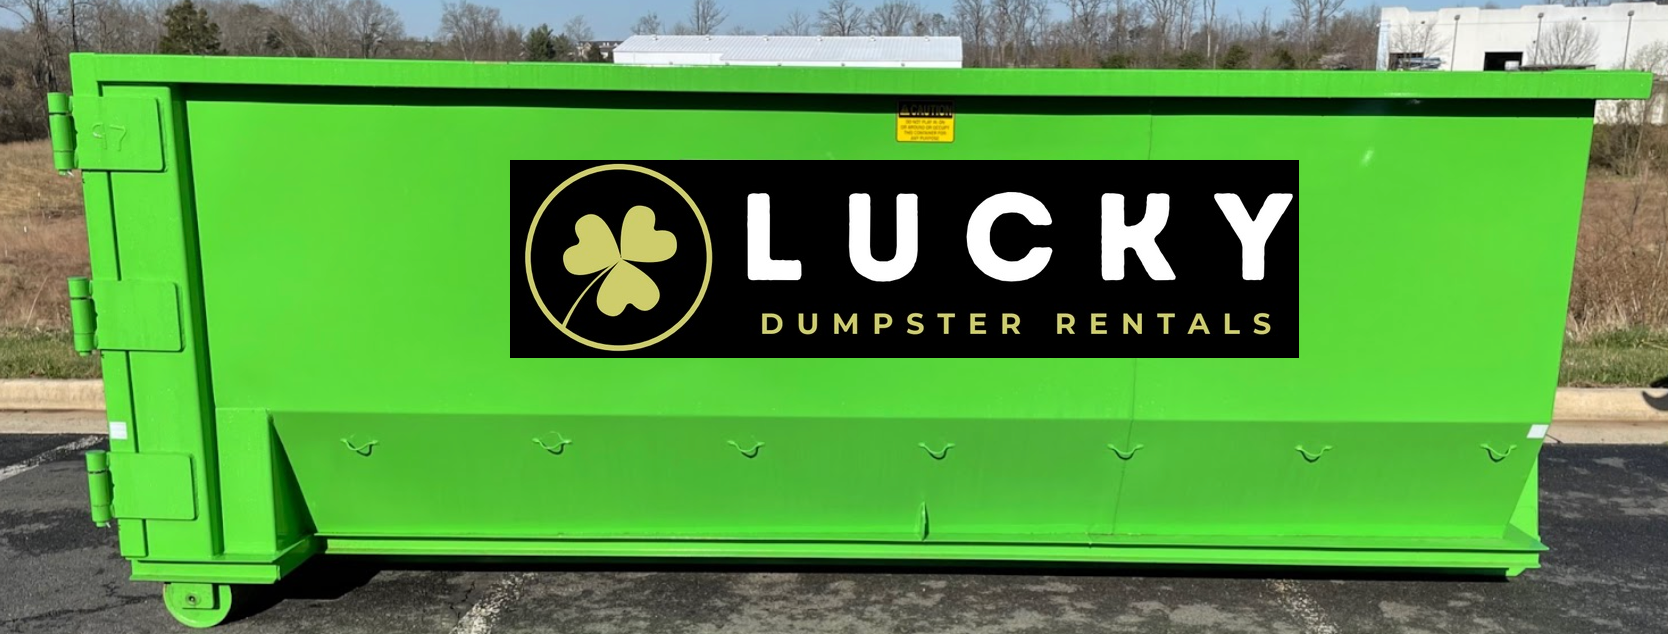 Jonesboro Dumpster Rentals - Lucky Dumpster Rentals of Jonesboro, GA